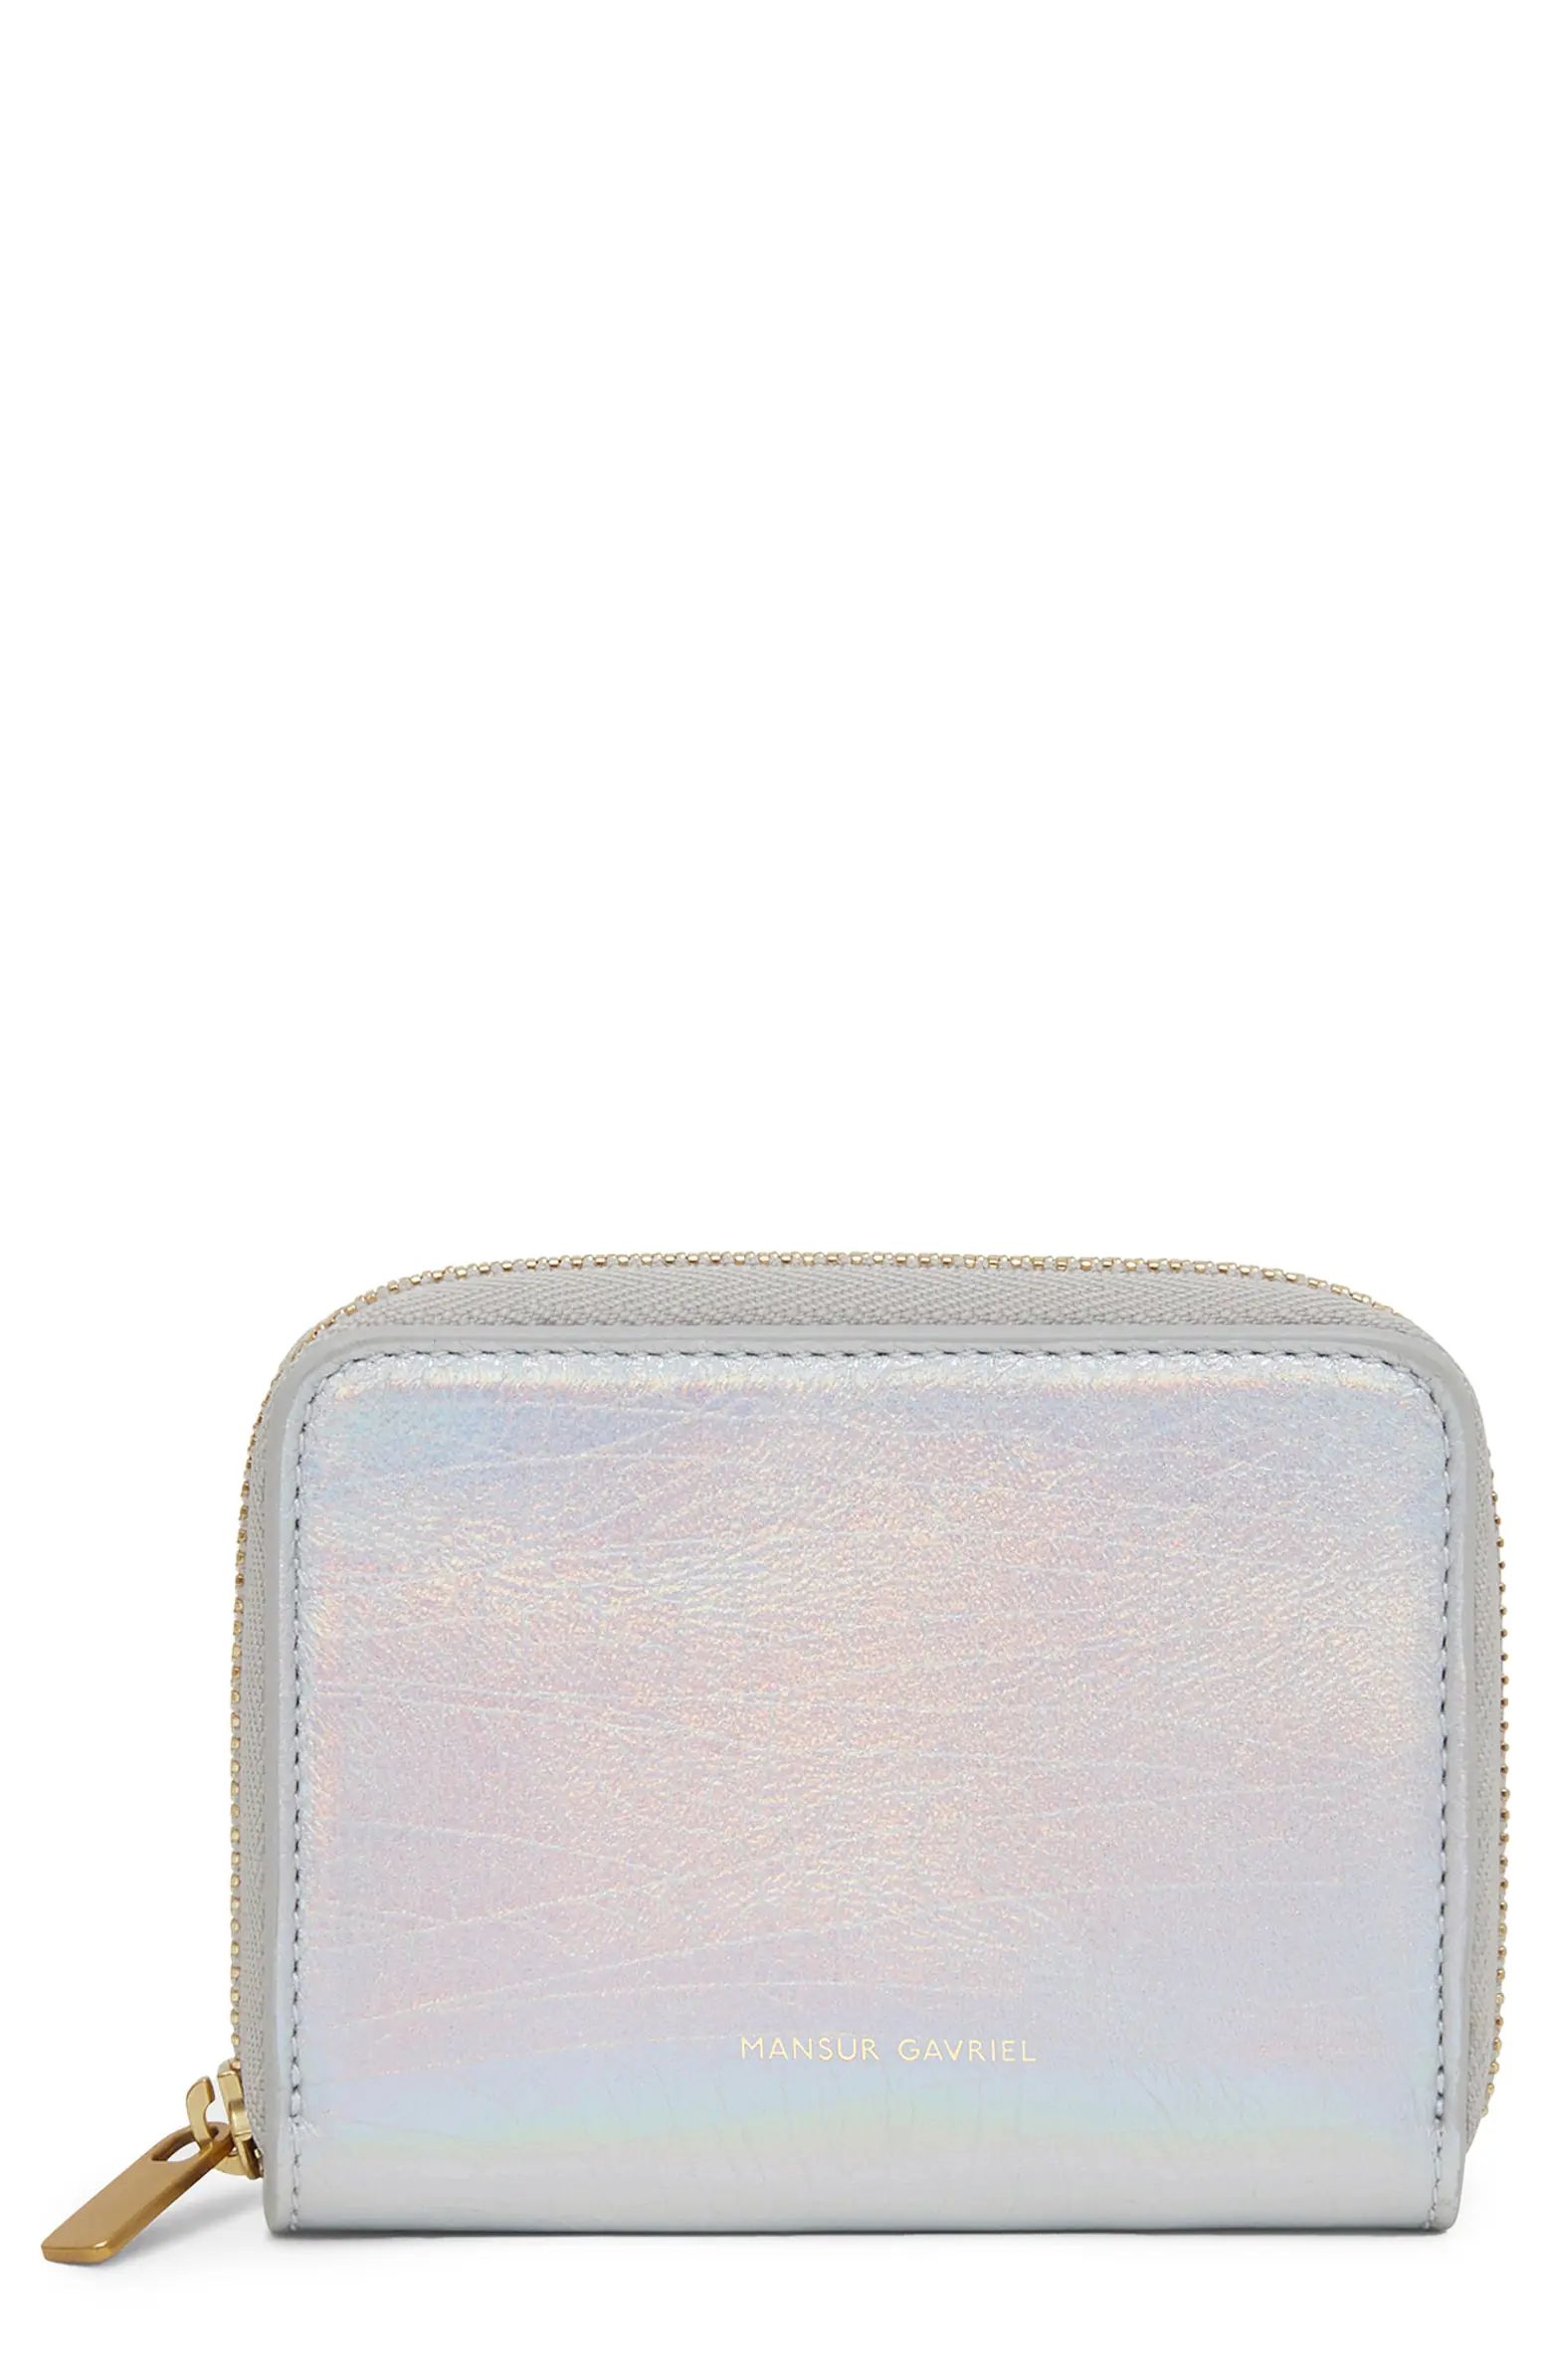 Mansur Gavriel Iridescent Leather Zip Wallet | Nordstrom | Nordstrom